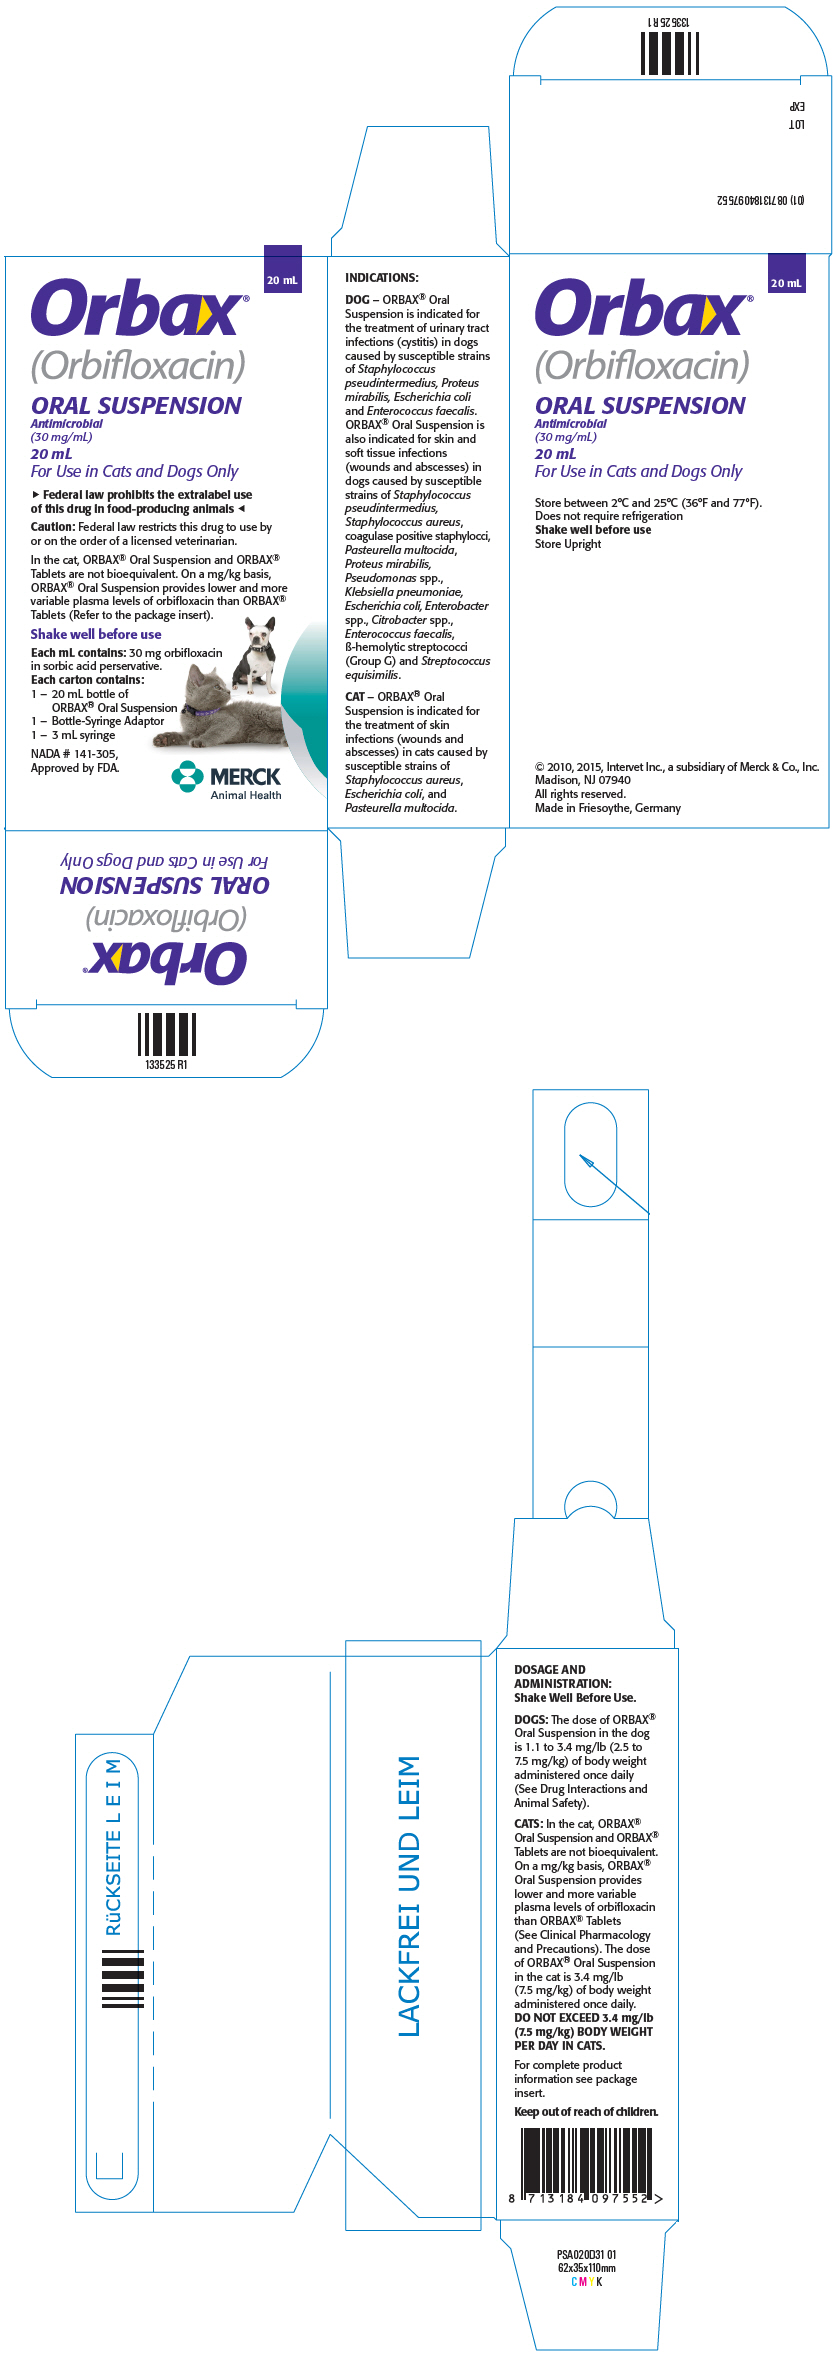 PRINCIPAL DISPLAY PANEL - 20 mL Bottle Carton